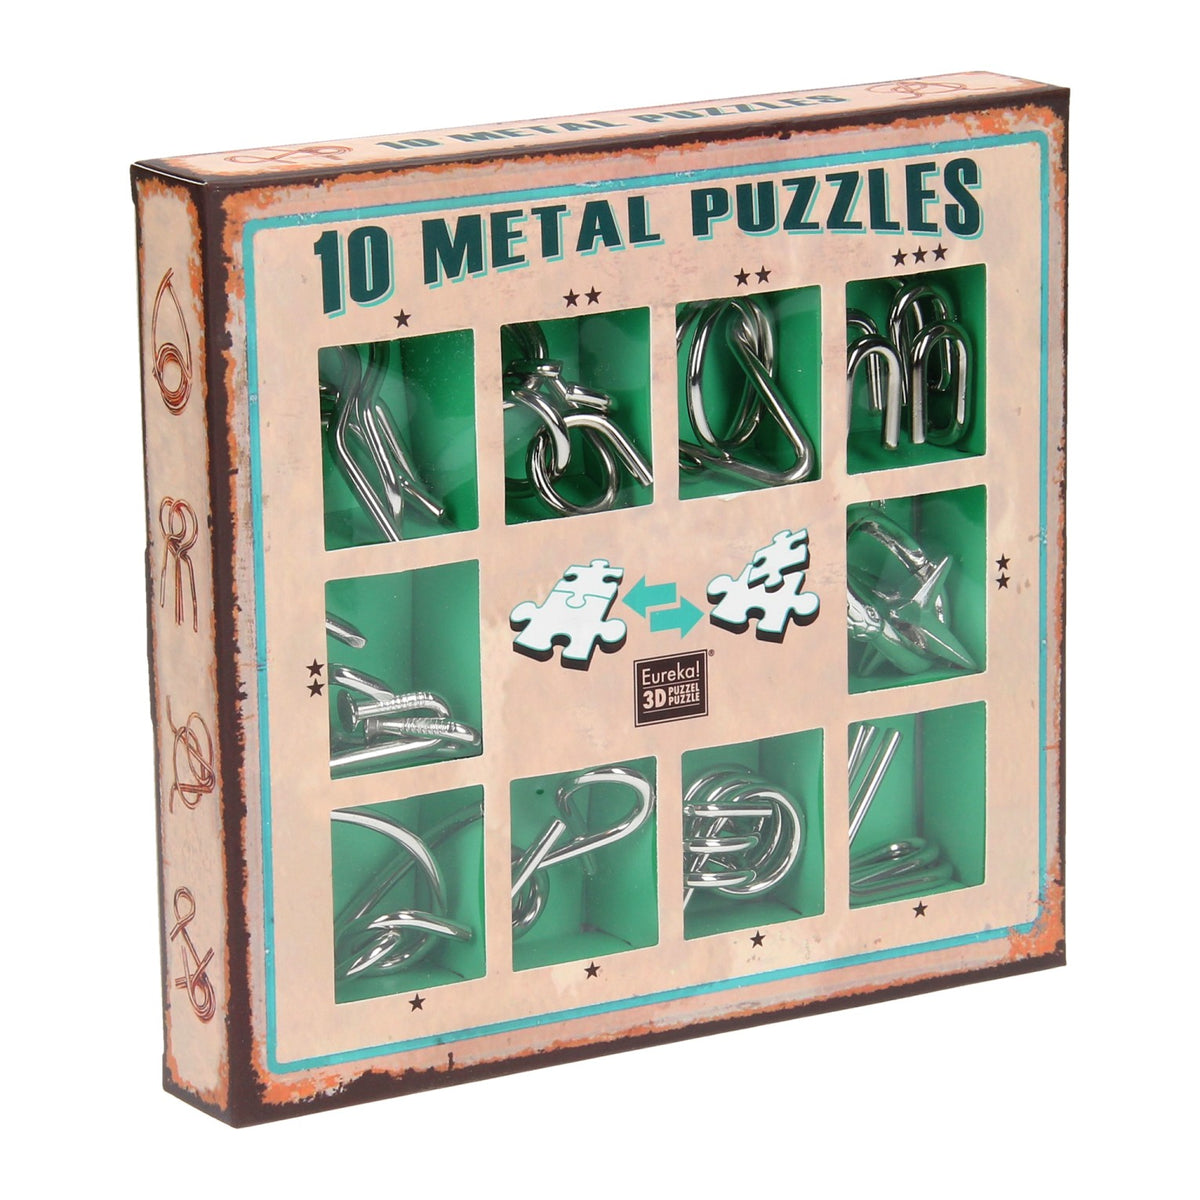 10 metal puzzles